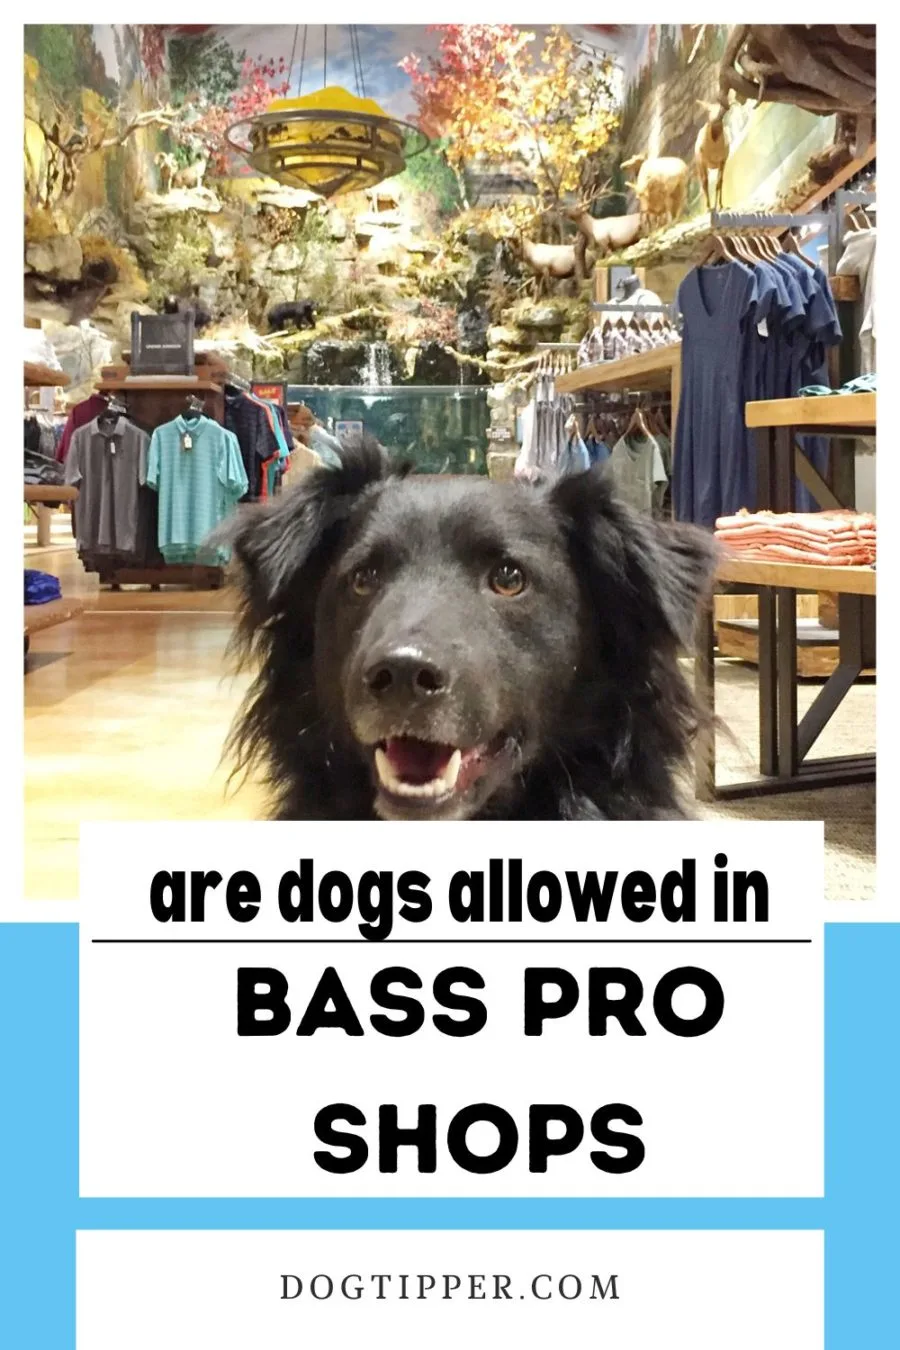 Is Bass Pro Shops dog friendly?